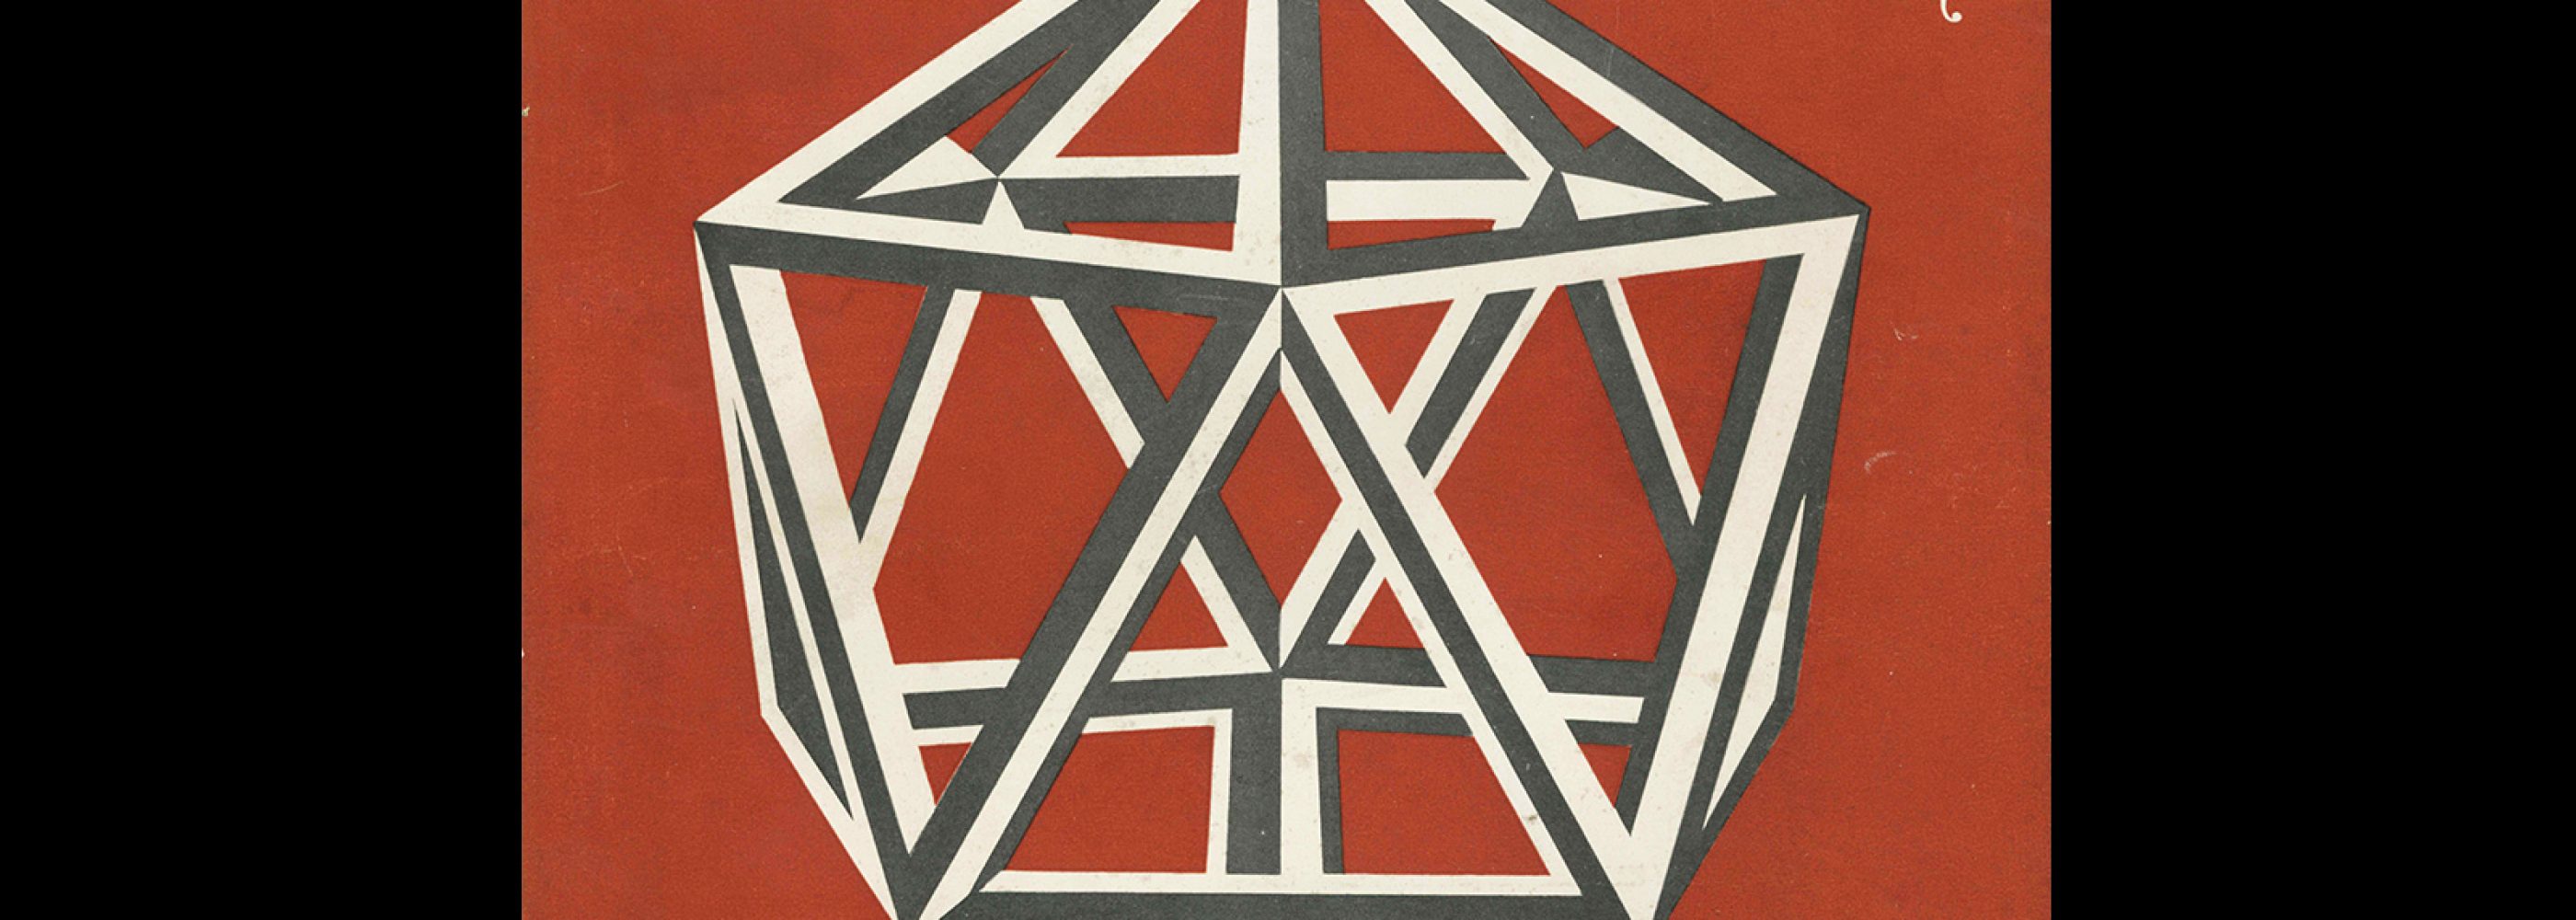 Graphis 27, 1949. Cover design by Jean Picart Le Doux